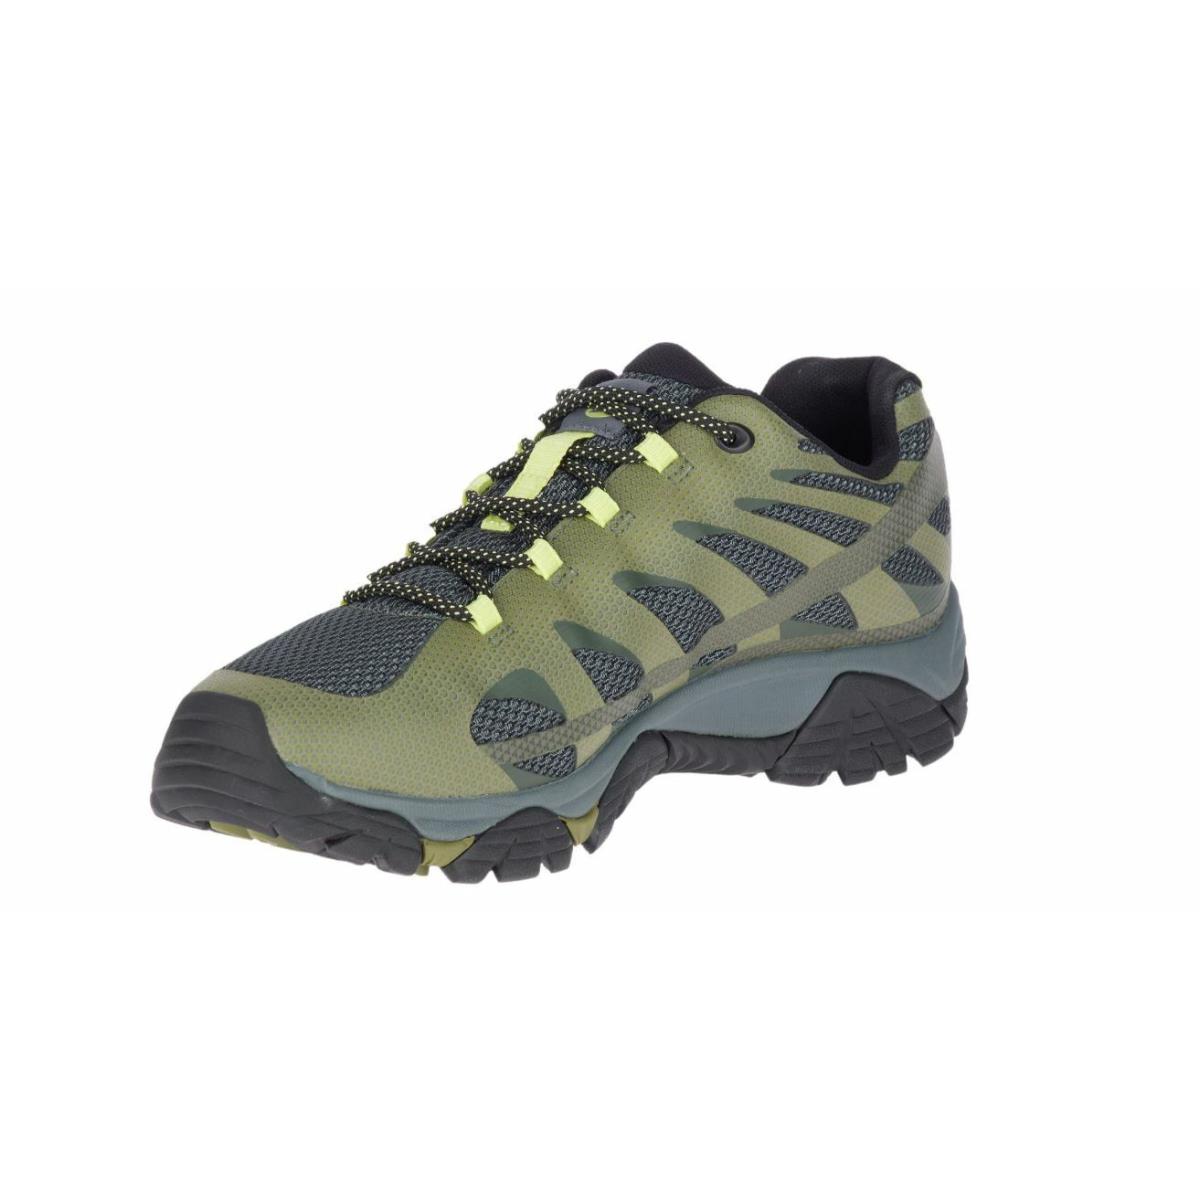 Merrell Moab Edge 2 Hiking Men`s Sneakers Shoes US Size 9